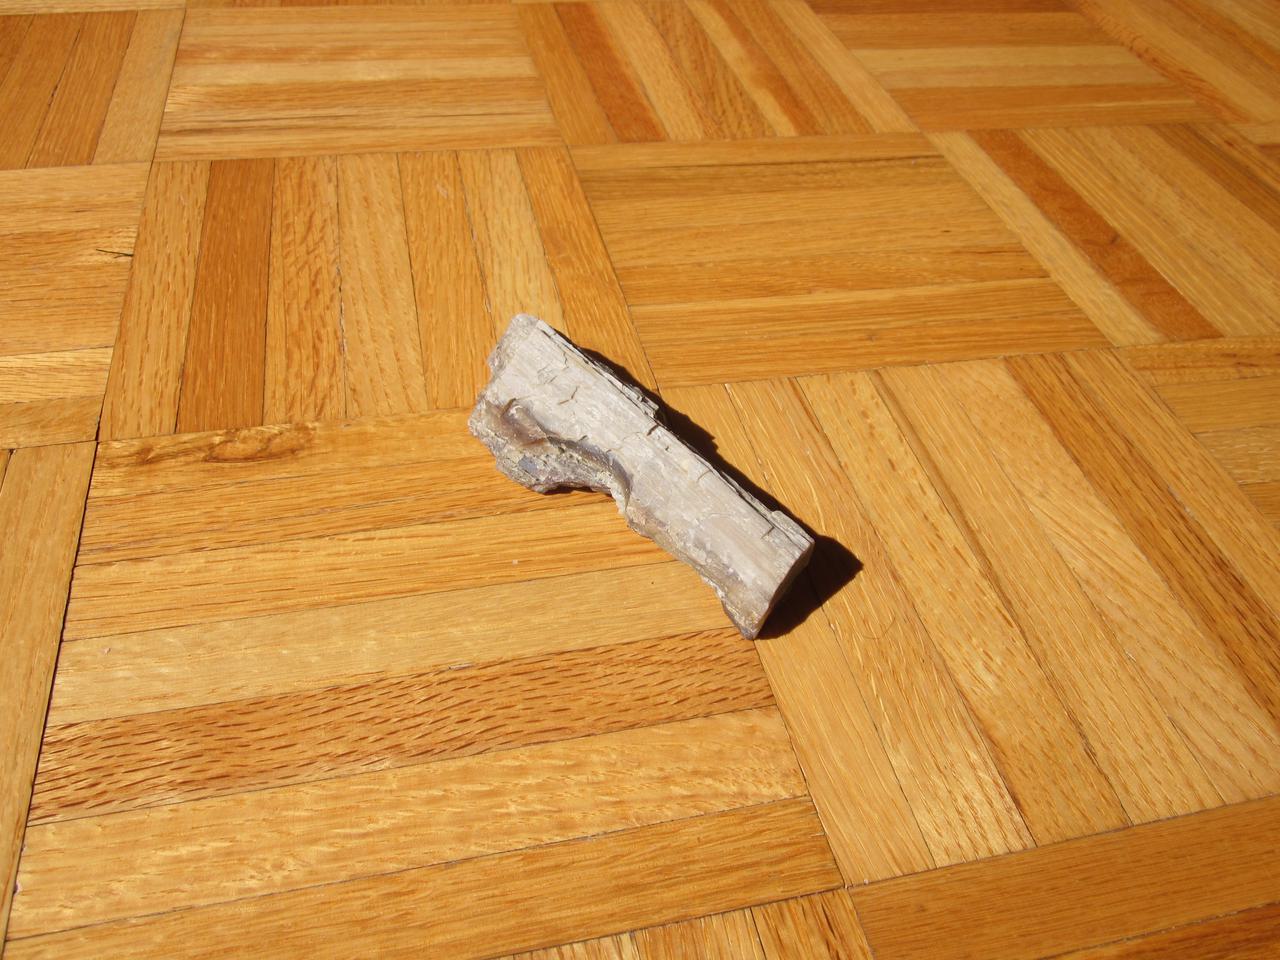 petrified wood on a parquet tiled floor